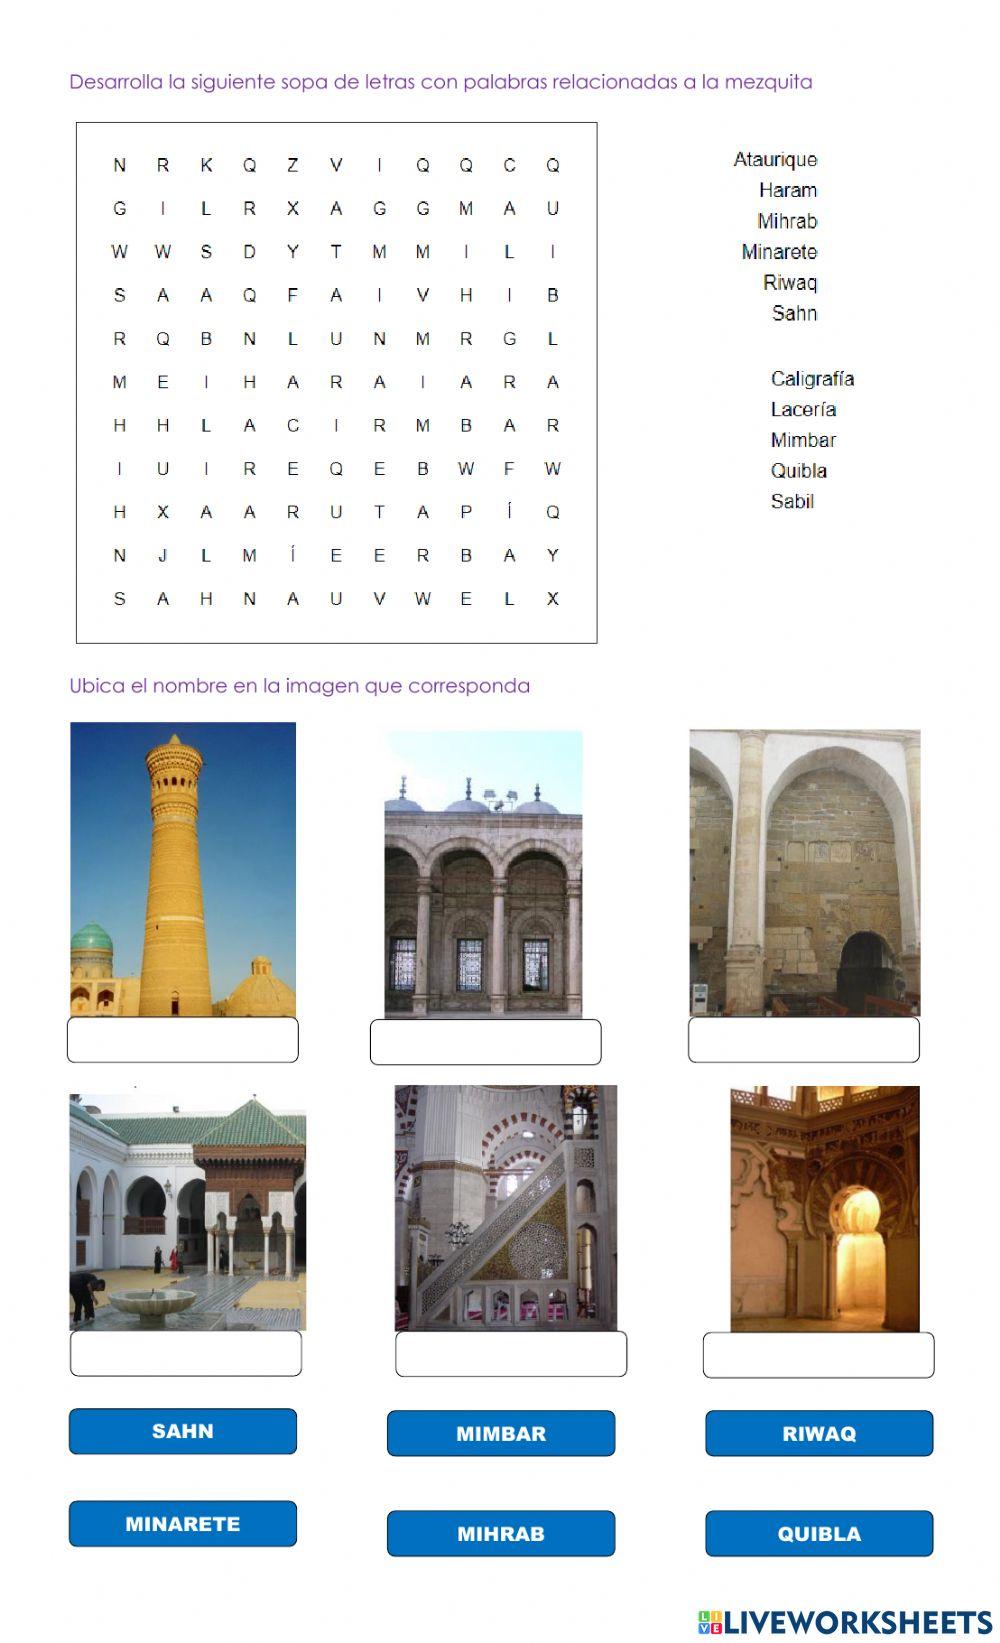 La mezquita